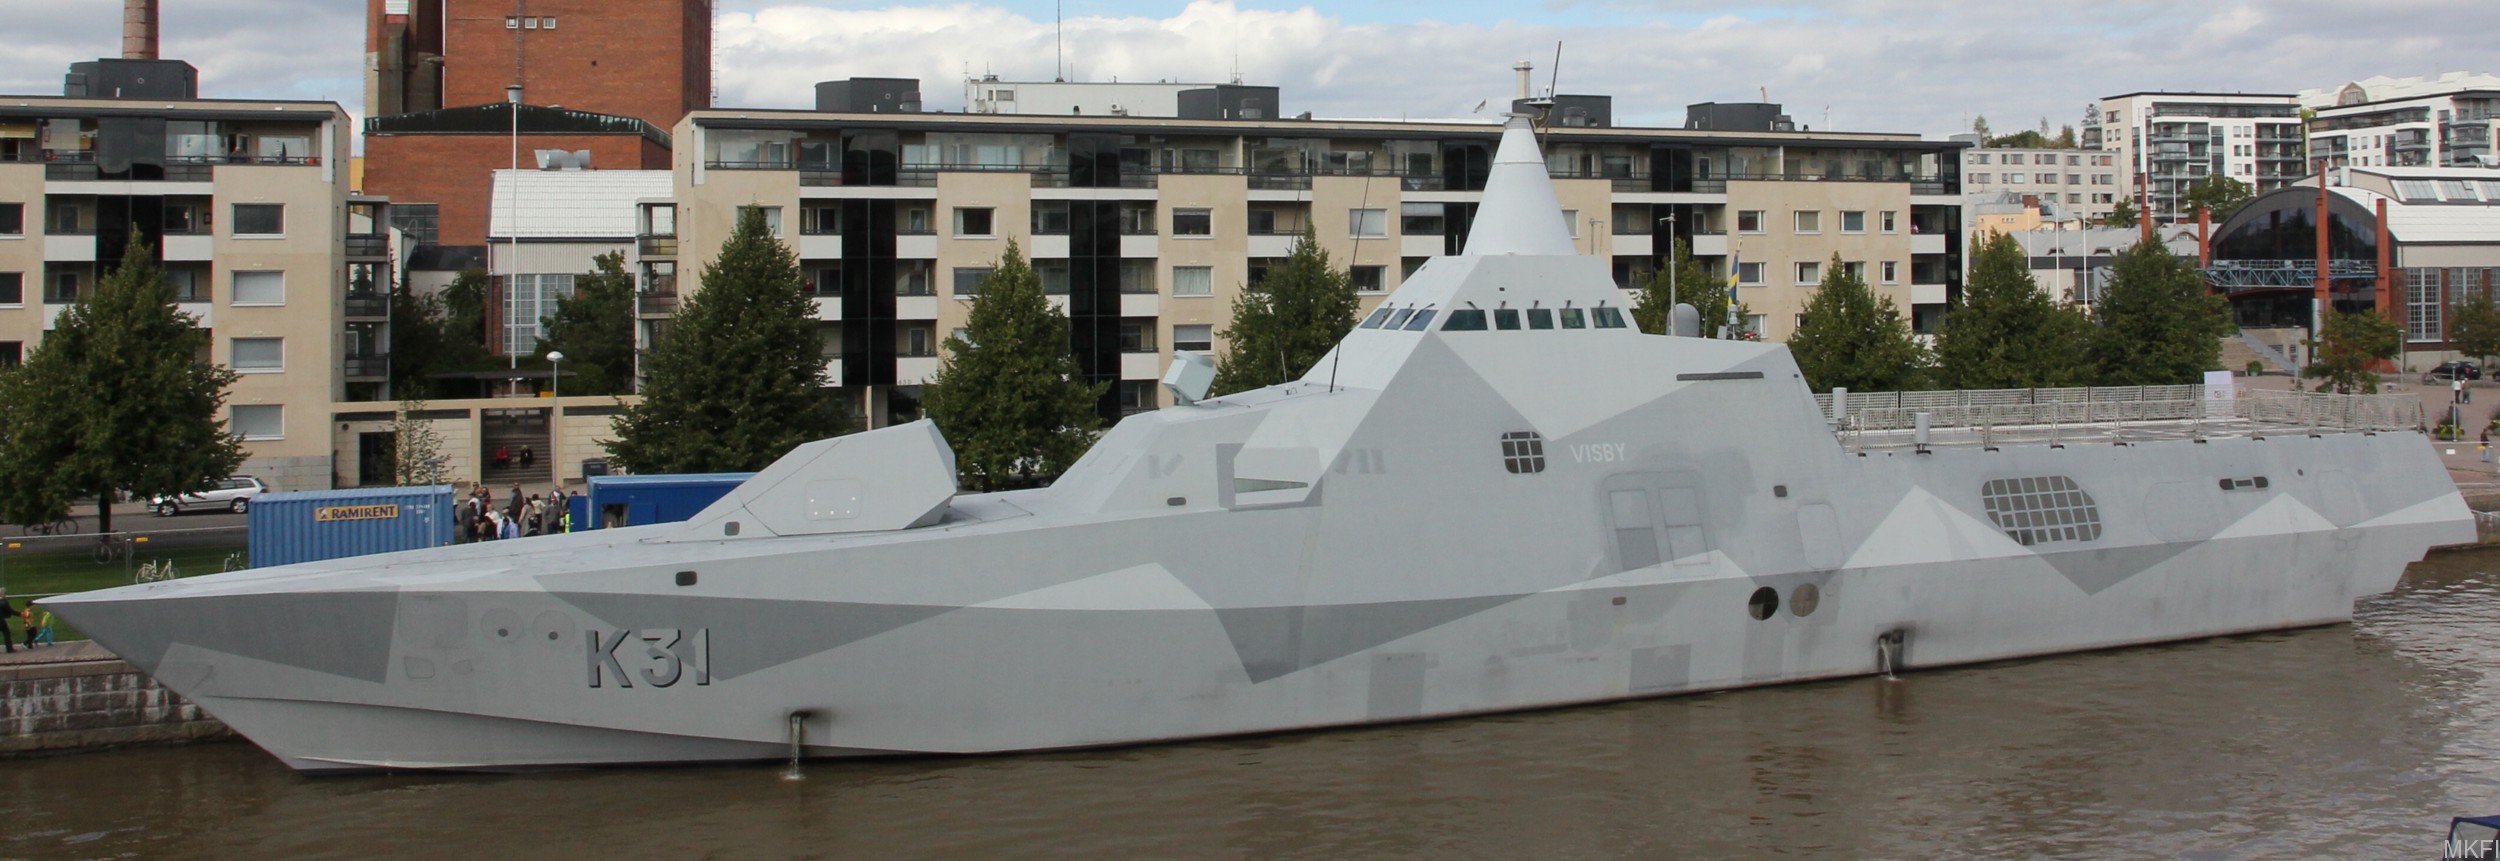 k31 hswms hms visby class corvette royal swedish navy svenska marinen 04